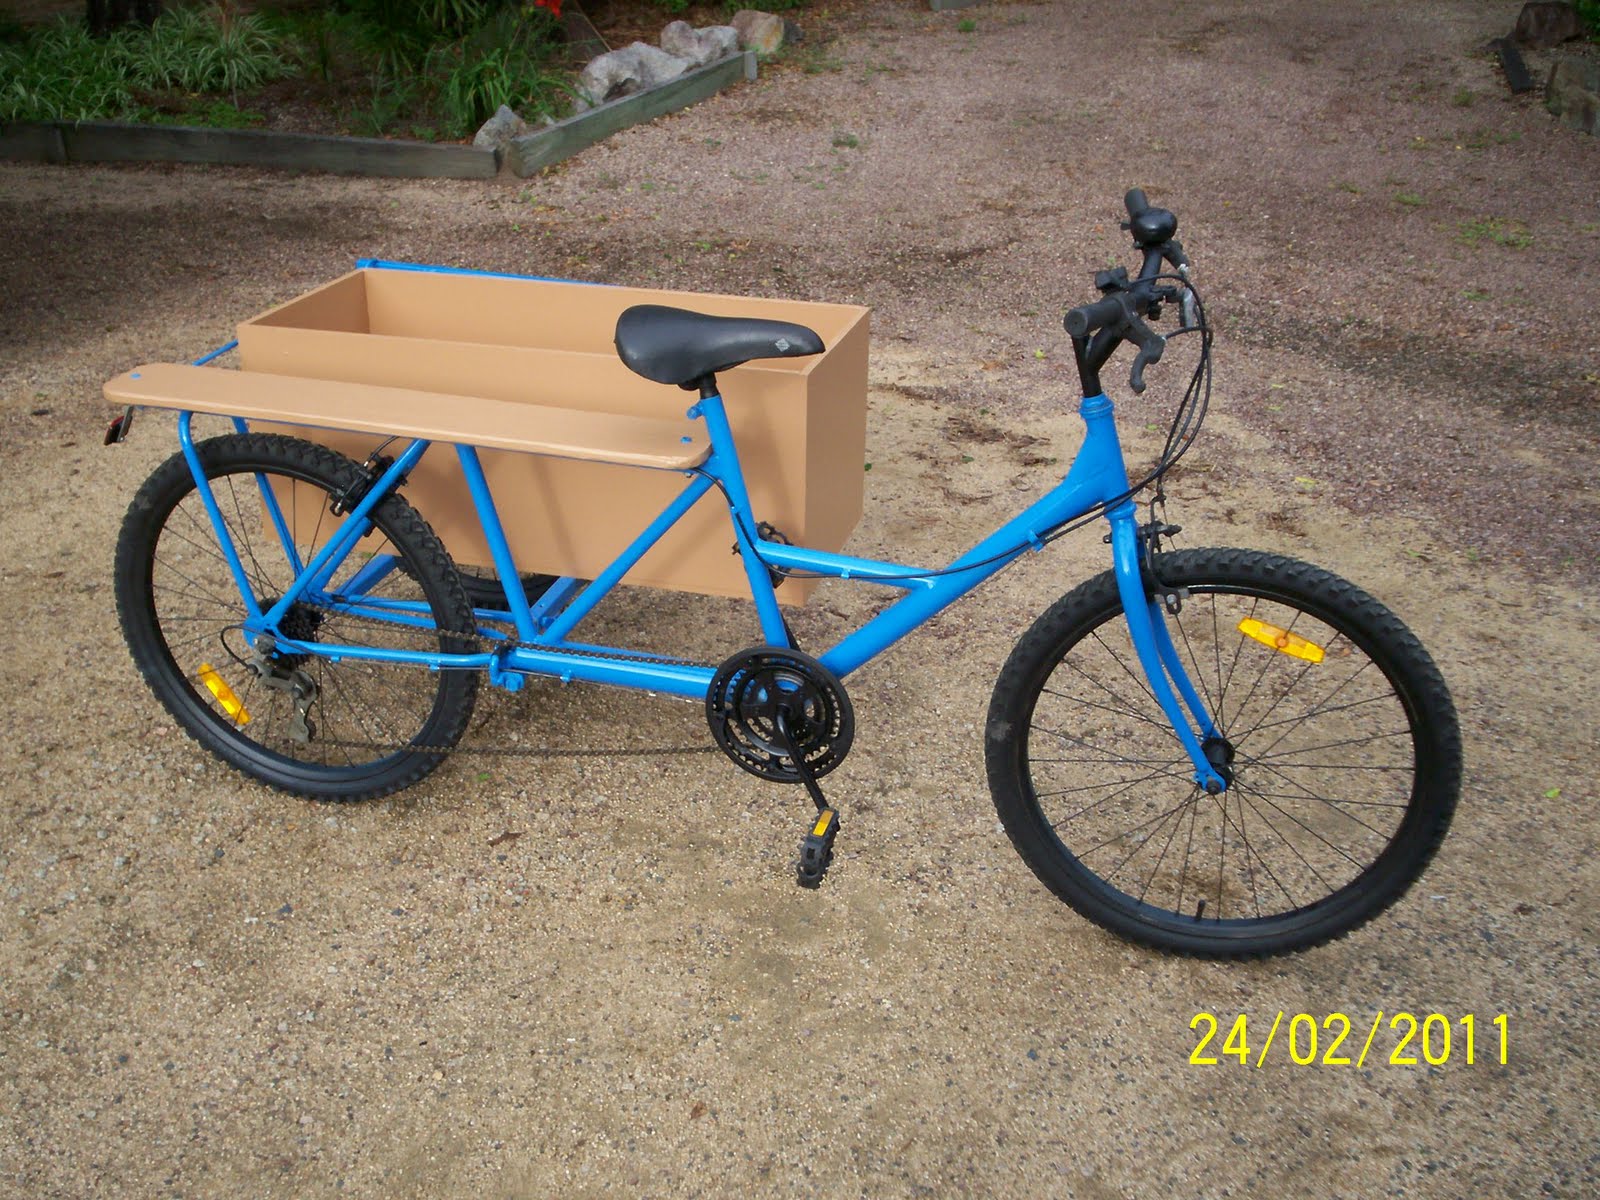 bike with sidecar